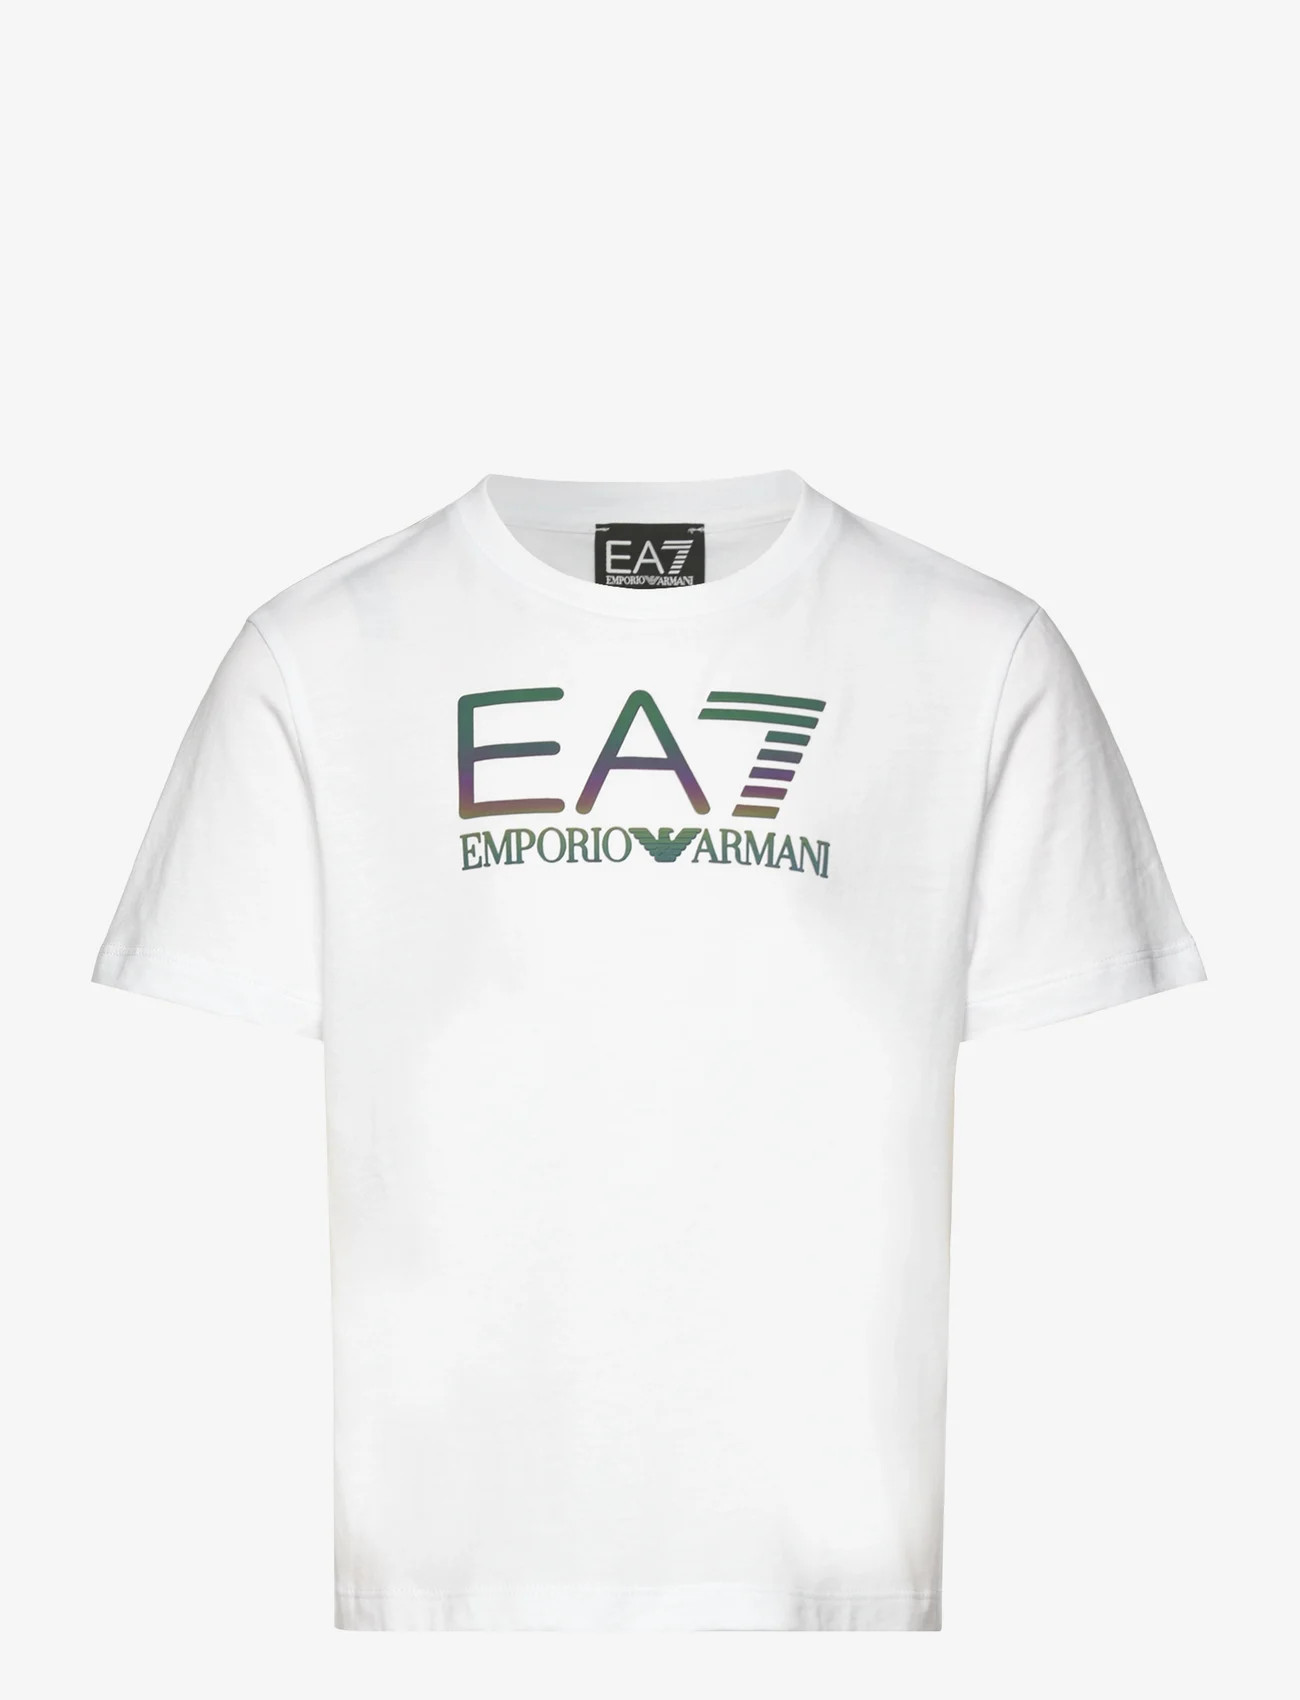 EA7 - T-SHIRT - kortærmede t-shirts - 1100-white - 0